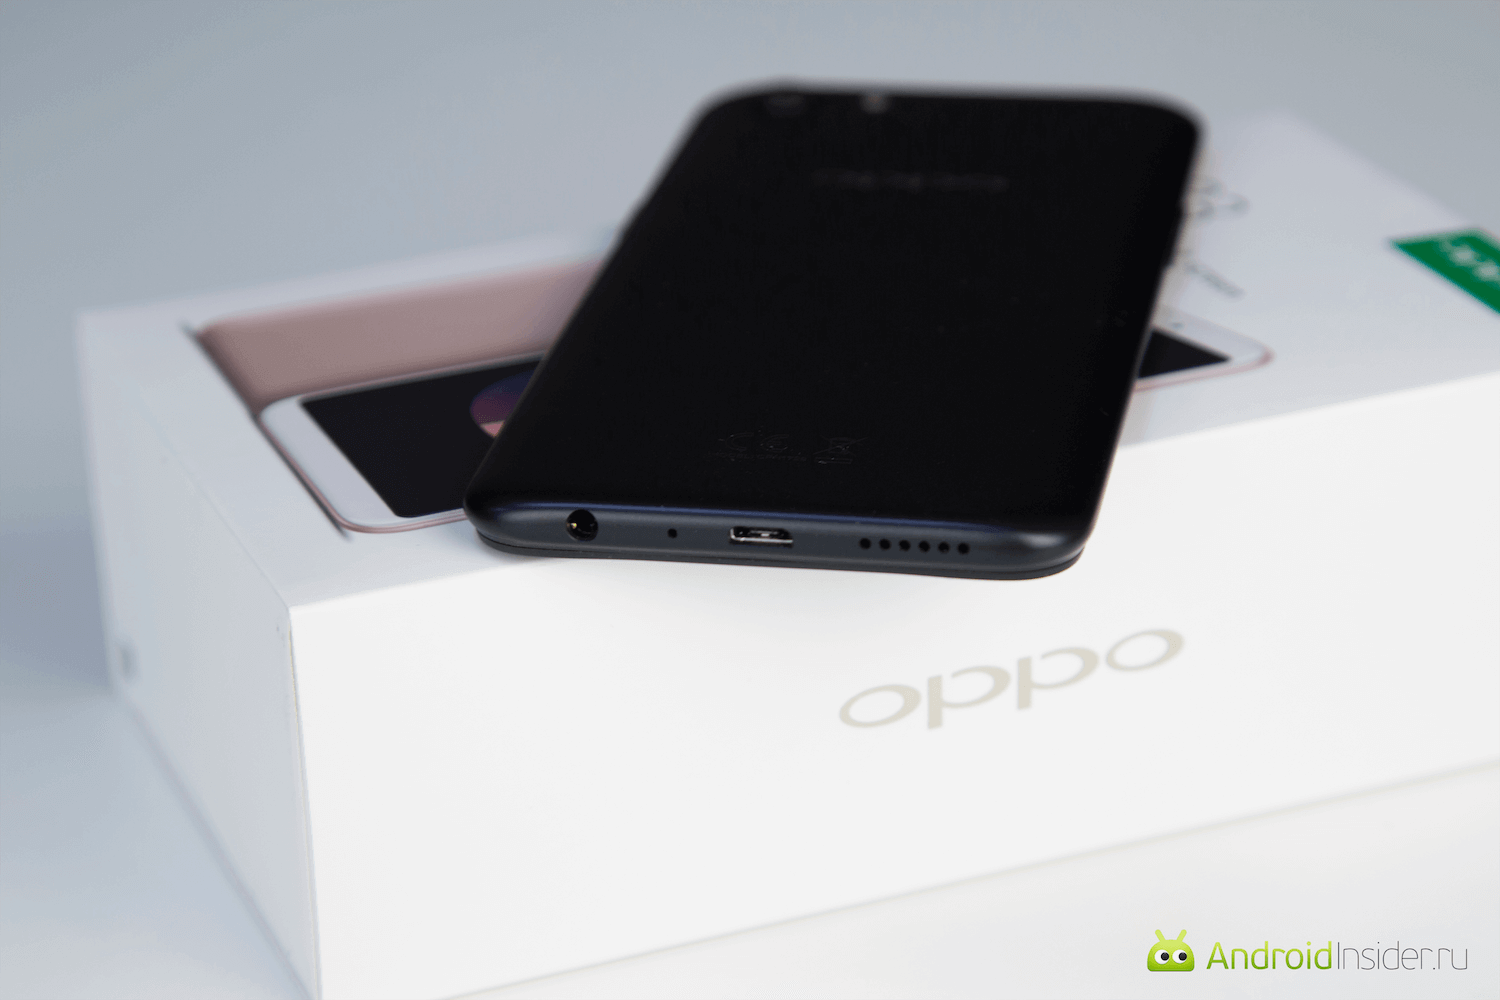 Видеообзор: Oppo A83 — максимально противоречивый смартфон. Фото.